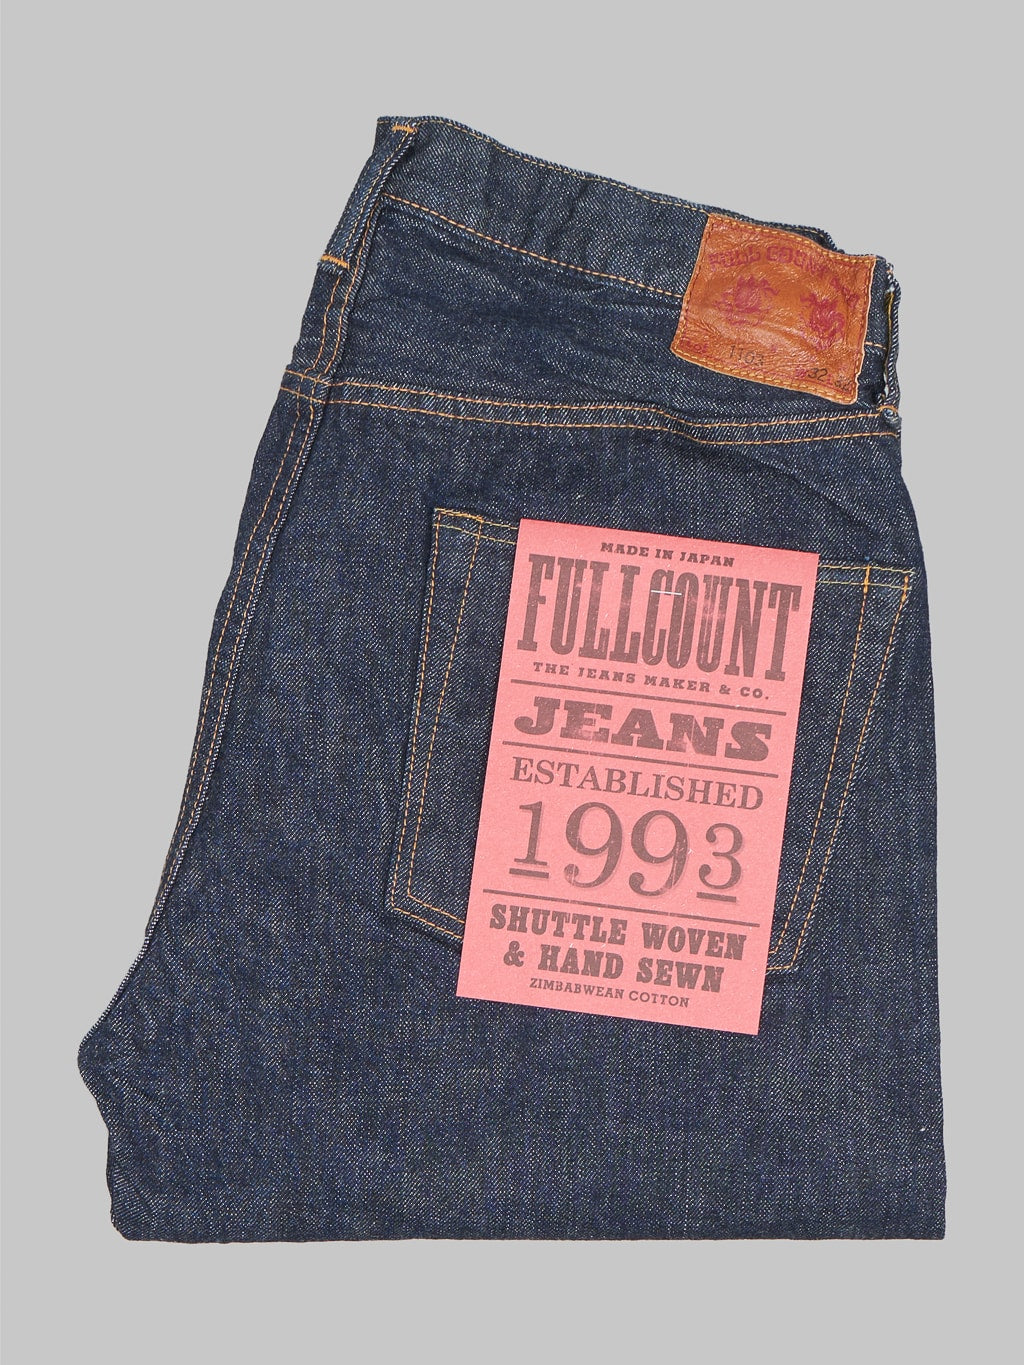 fullcount 1103 clean straight selvedge denim jeans made in japan